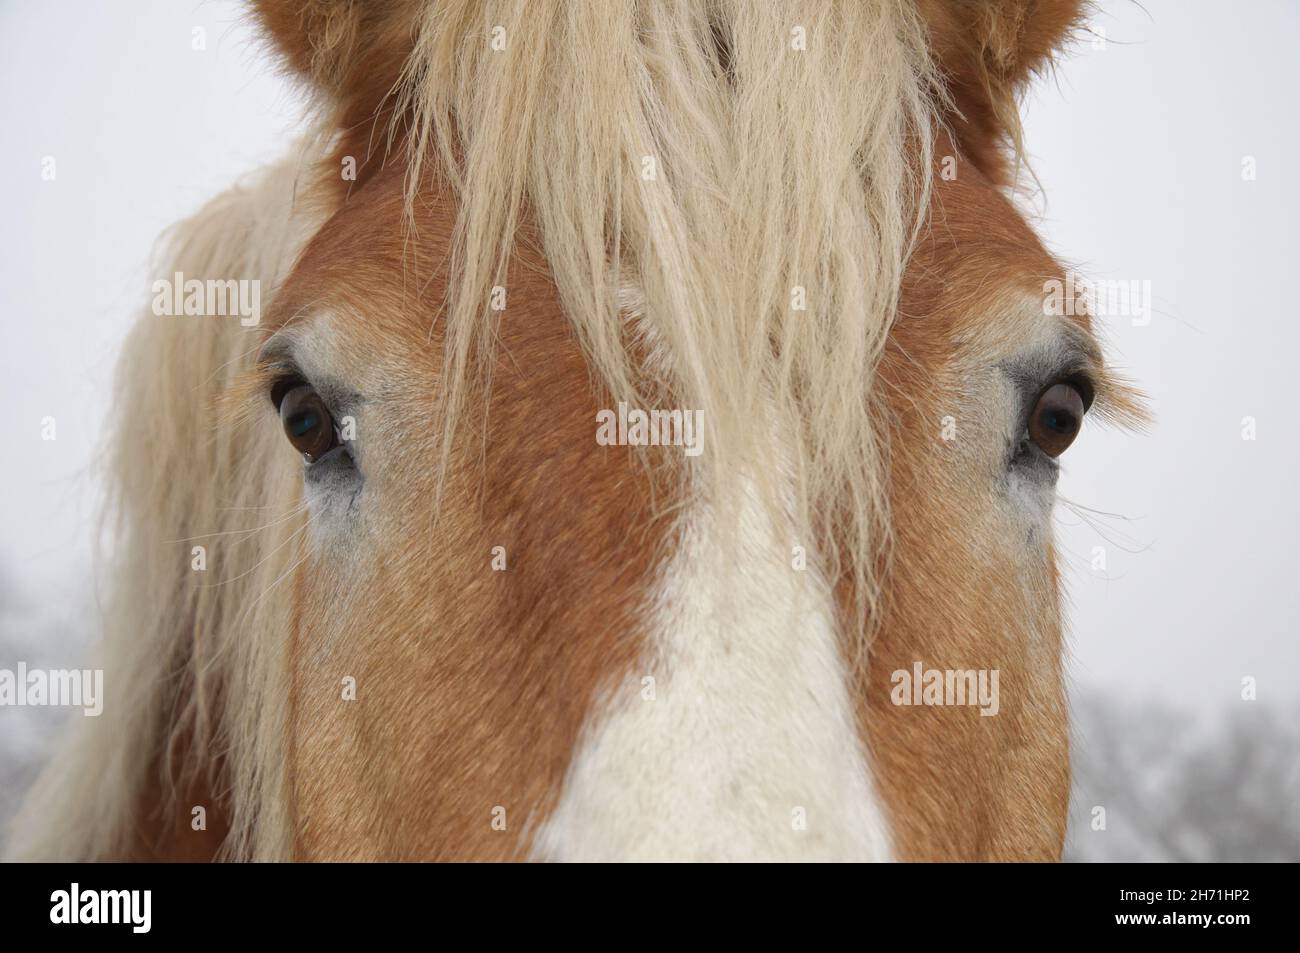 Primer plano de una cara de un caballo de tiro belga, con ambos ojos visibles Foto de stock